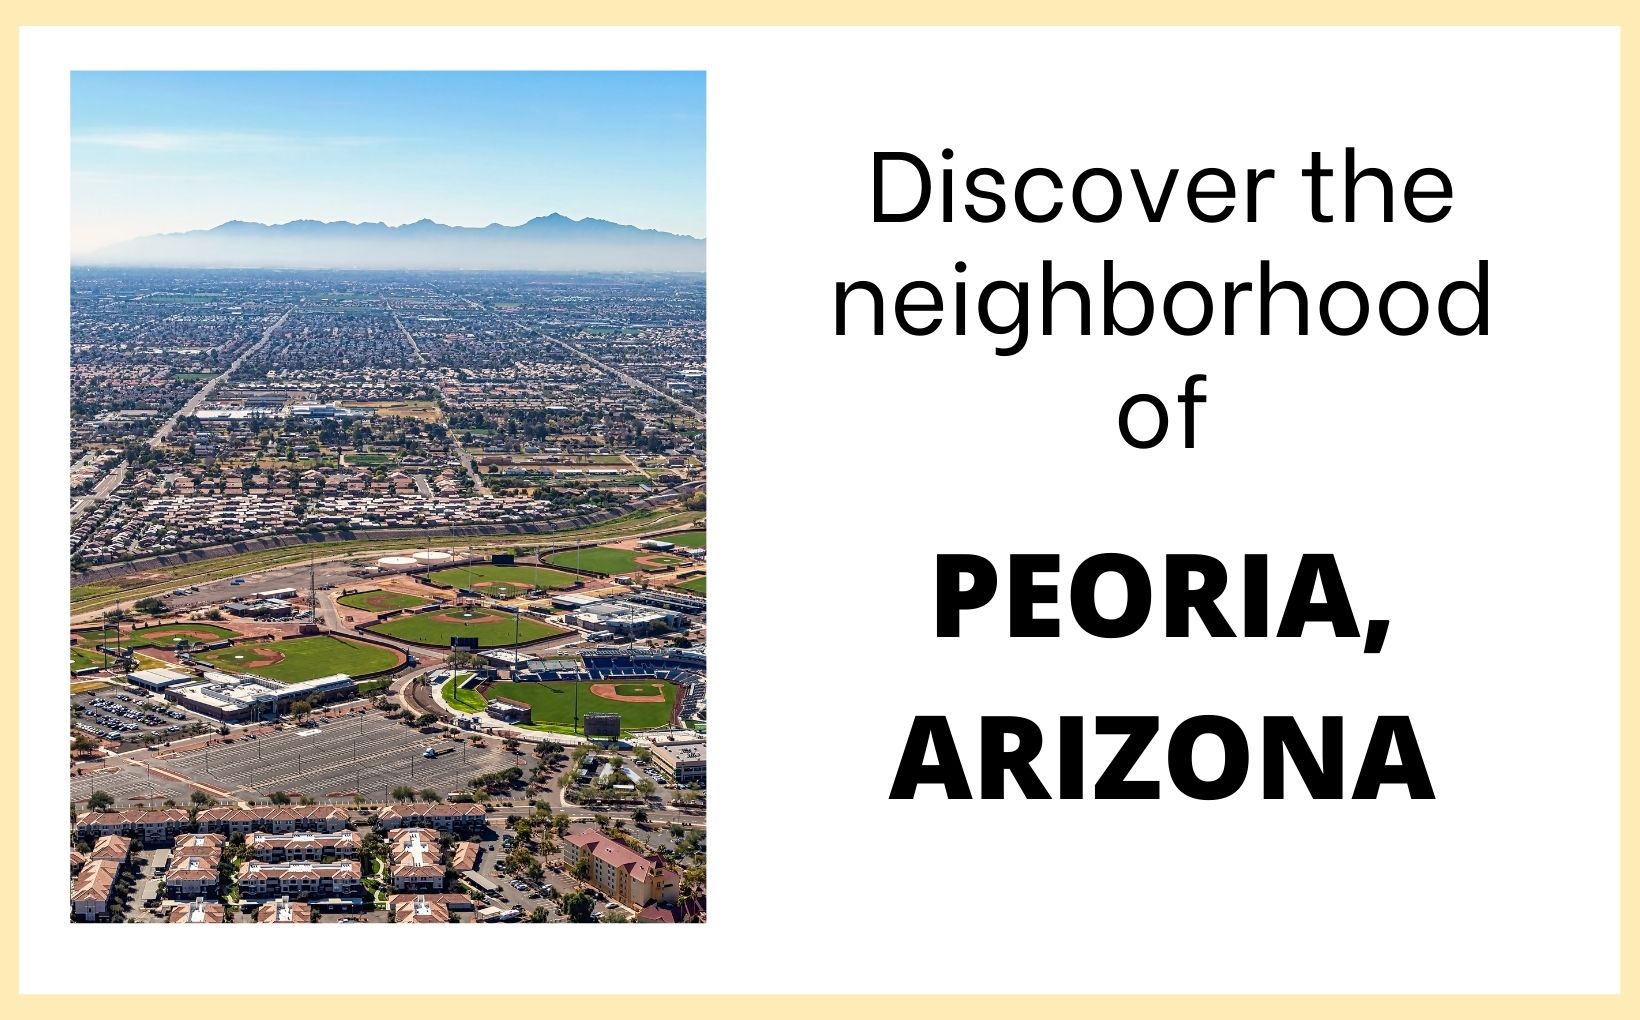 Tour of Peoria Arizona feature image